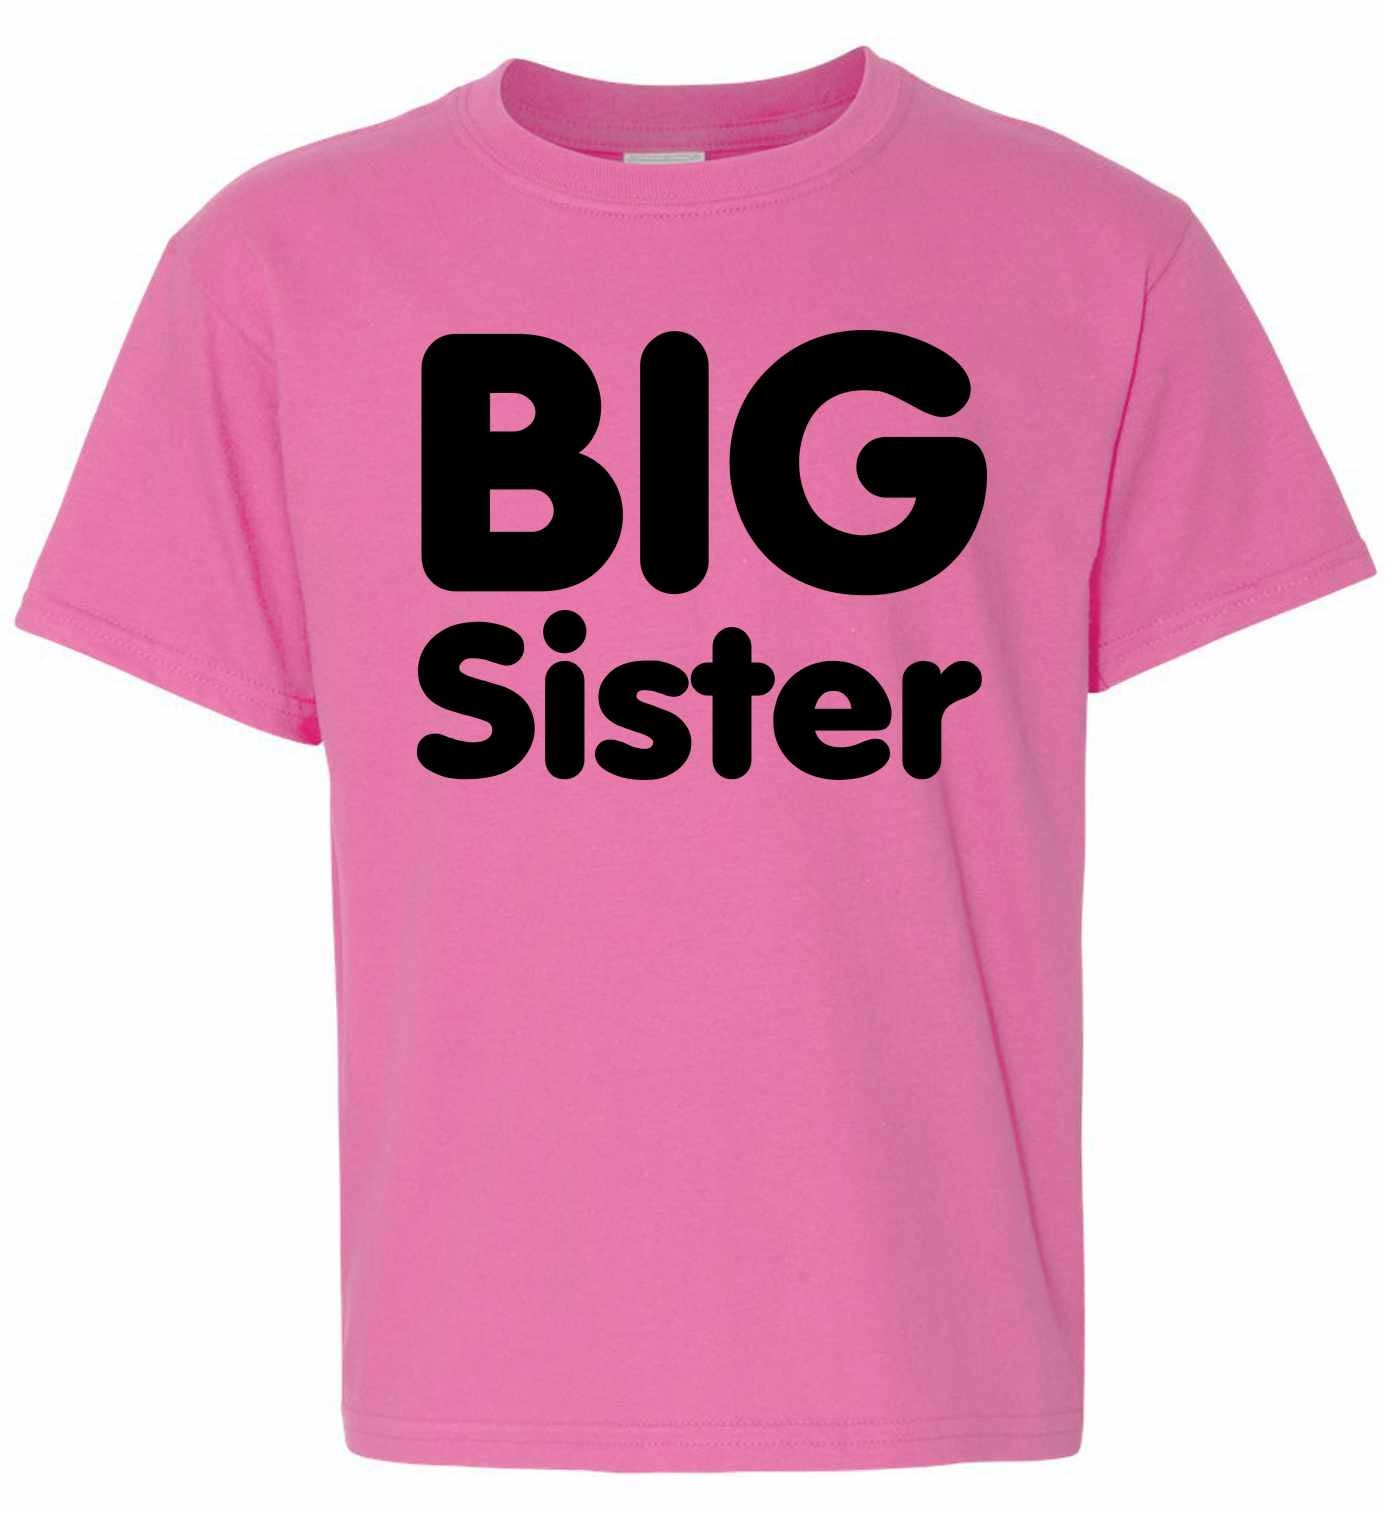 BIG SISTER on Youth T-Shirt (#853-201)